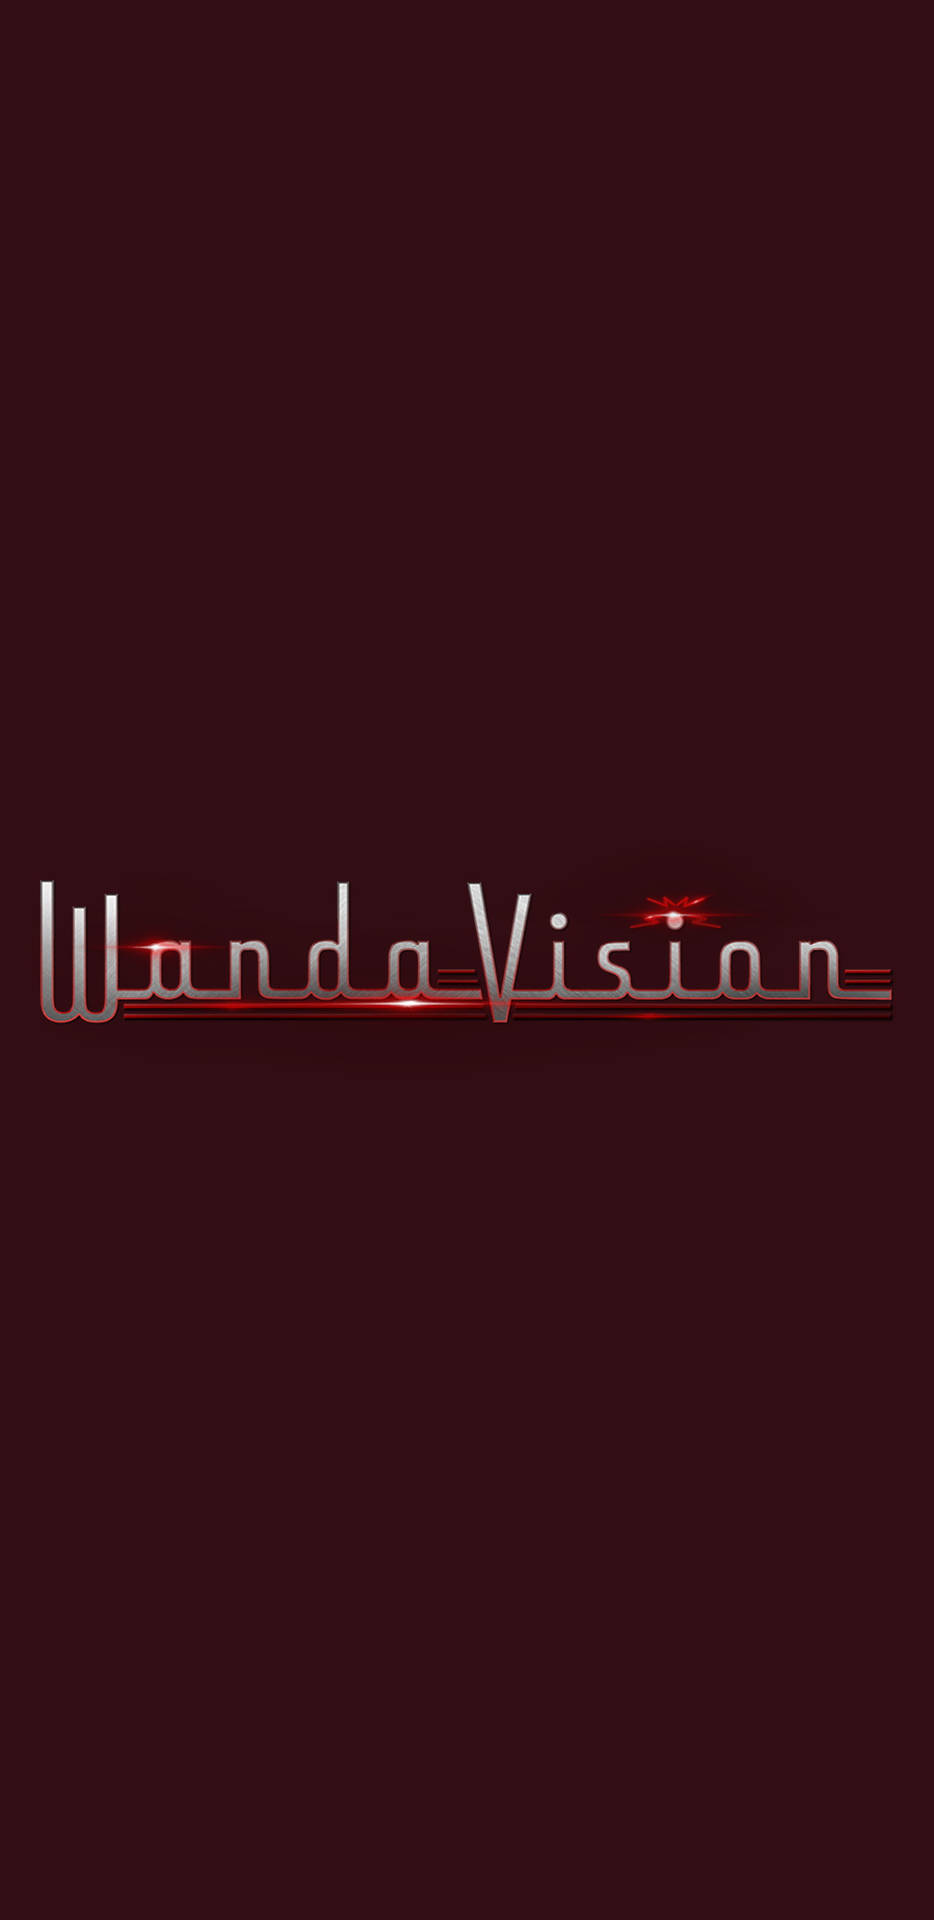 Disney Plus WandaVision Logo Wallpaper